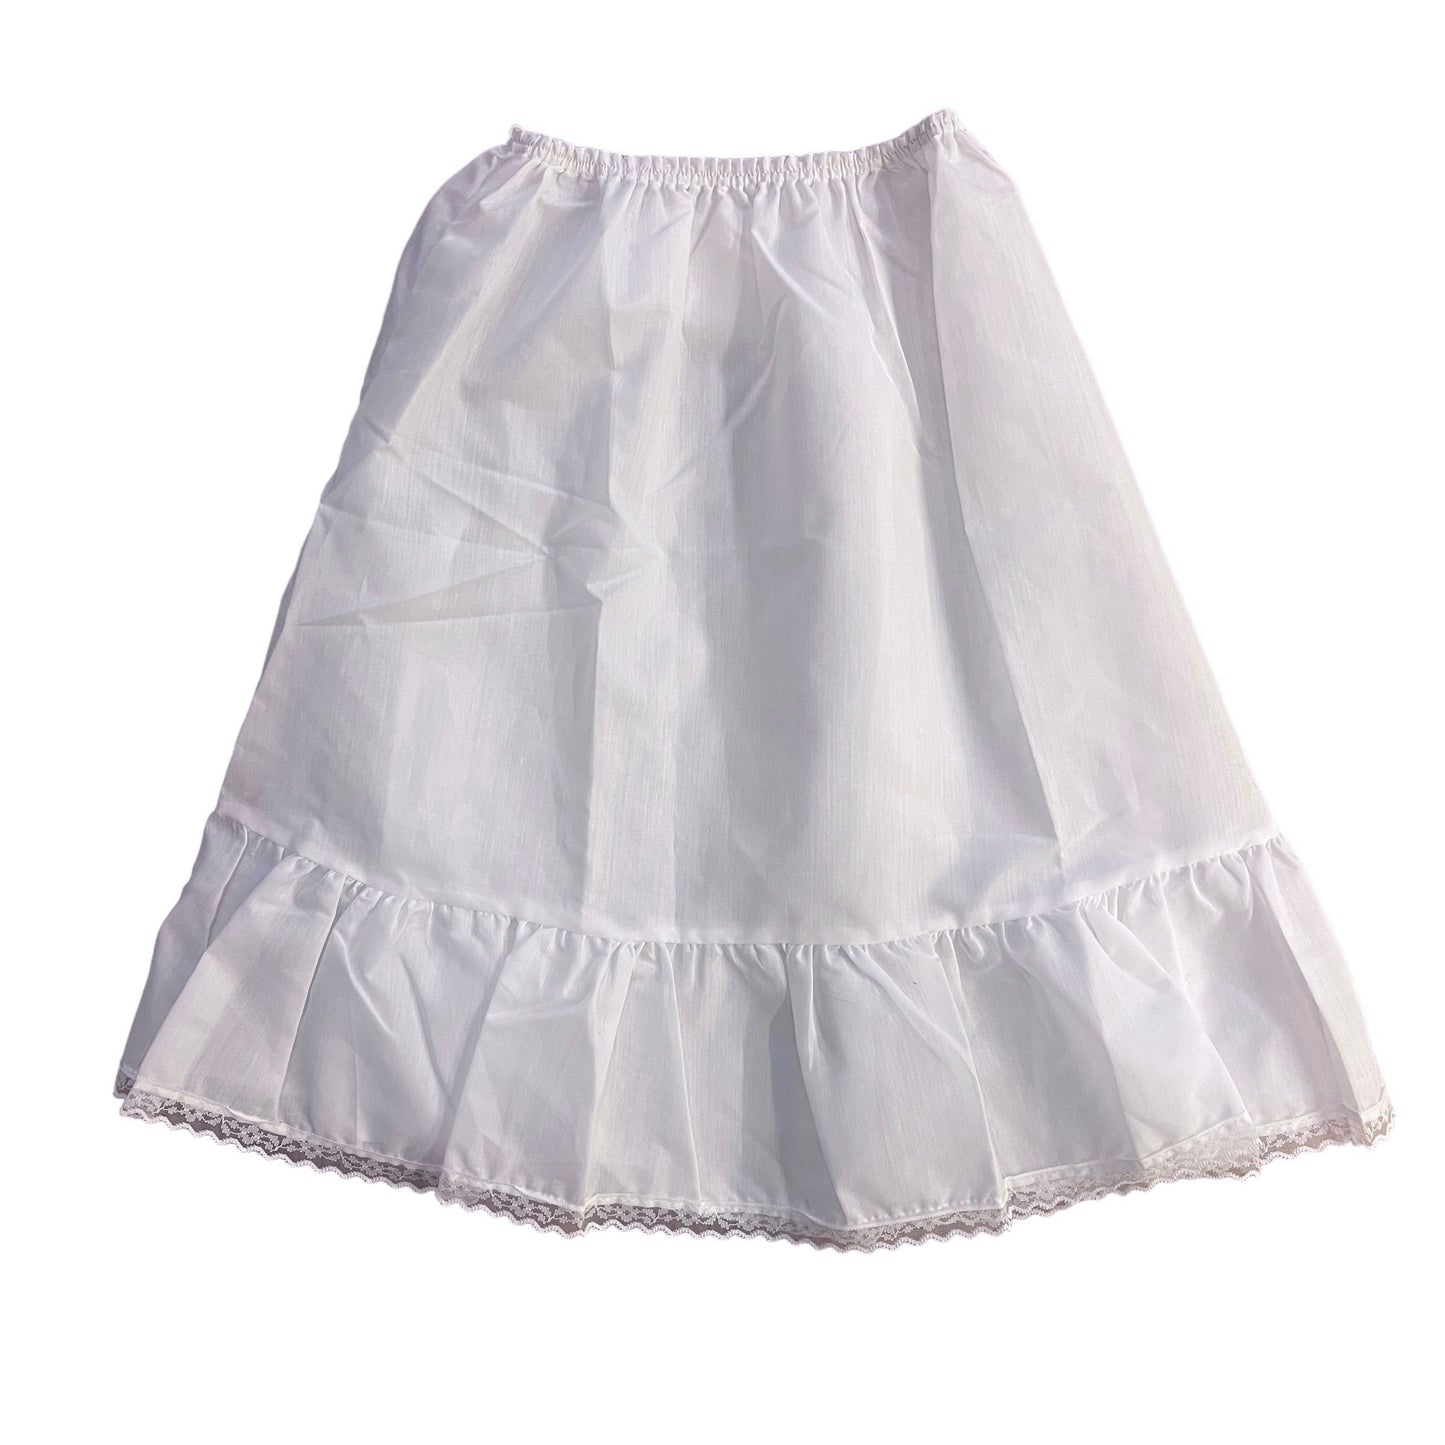 1960s White Petticoat Skirt 18-24 Months